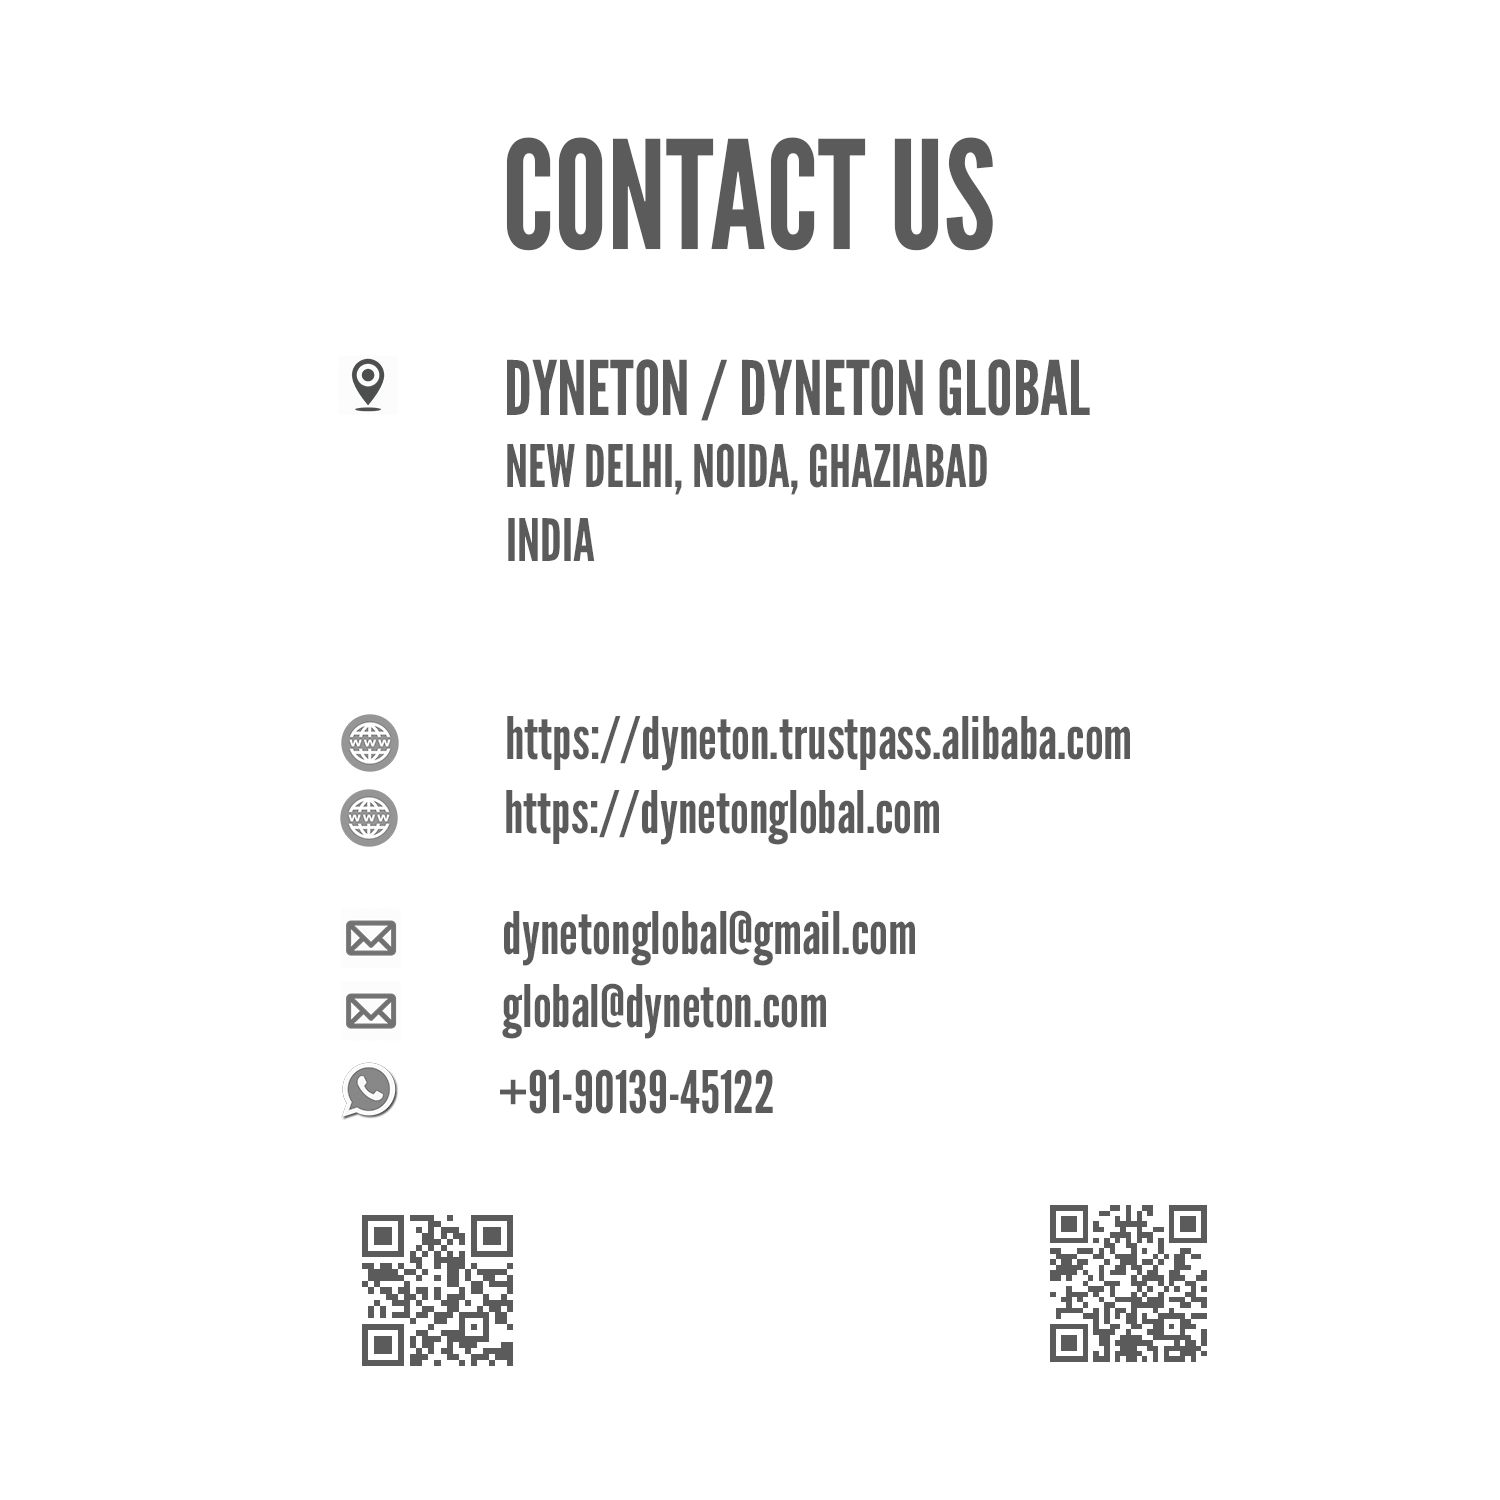 Contact Us - DYNETON